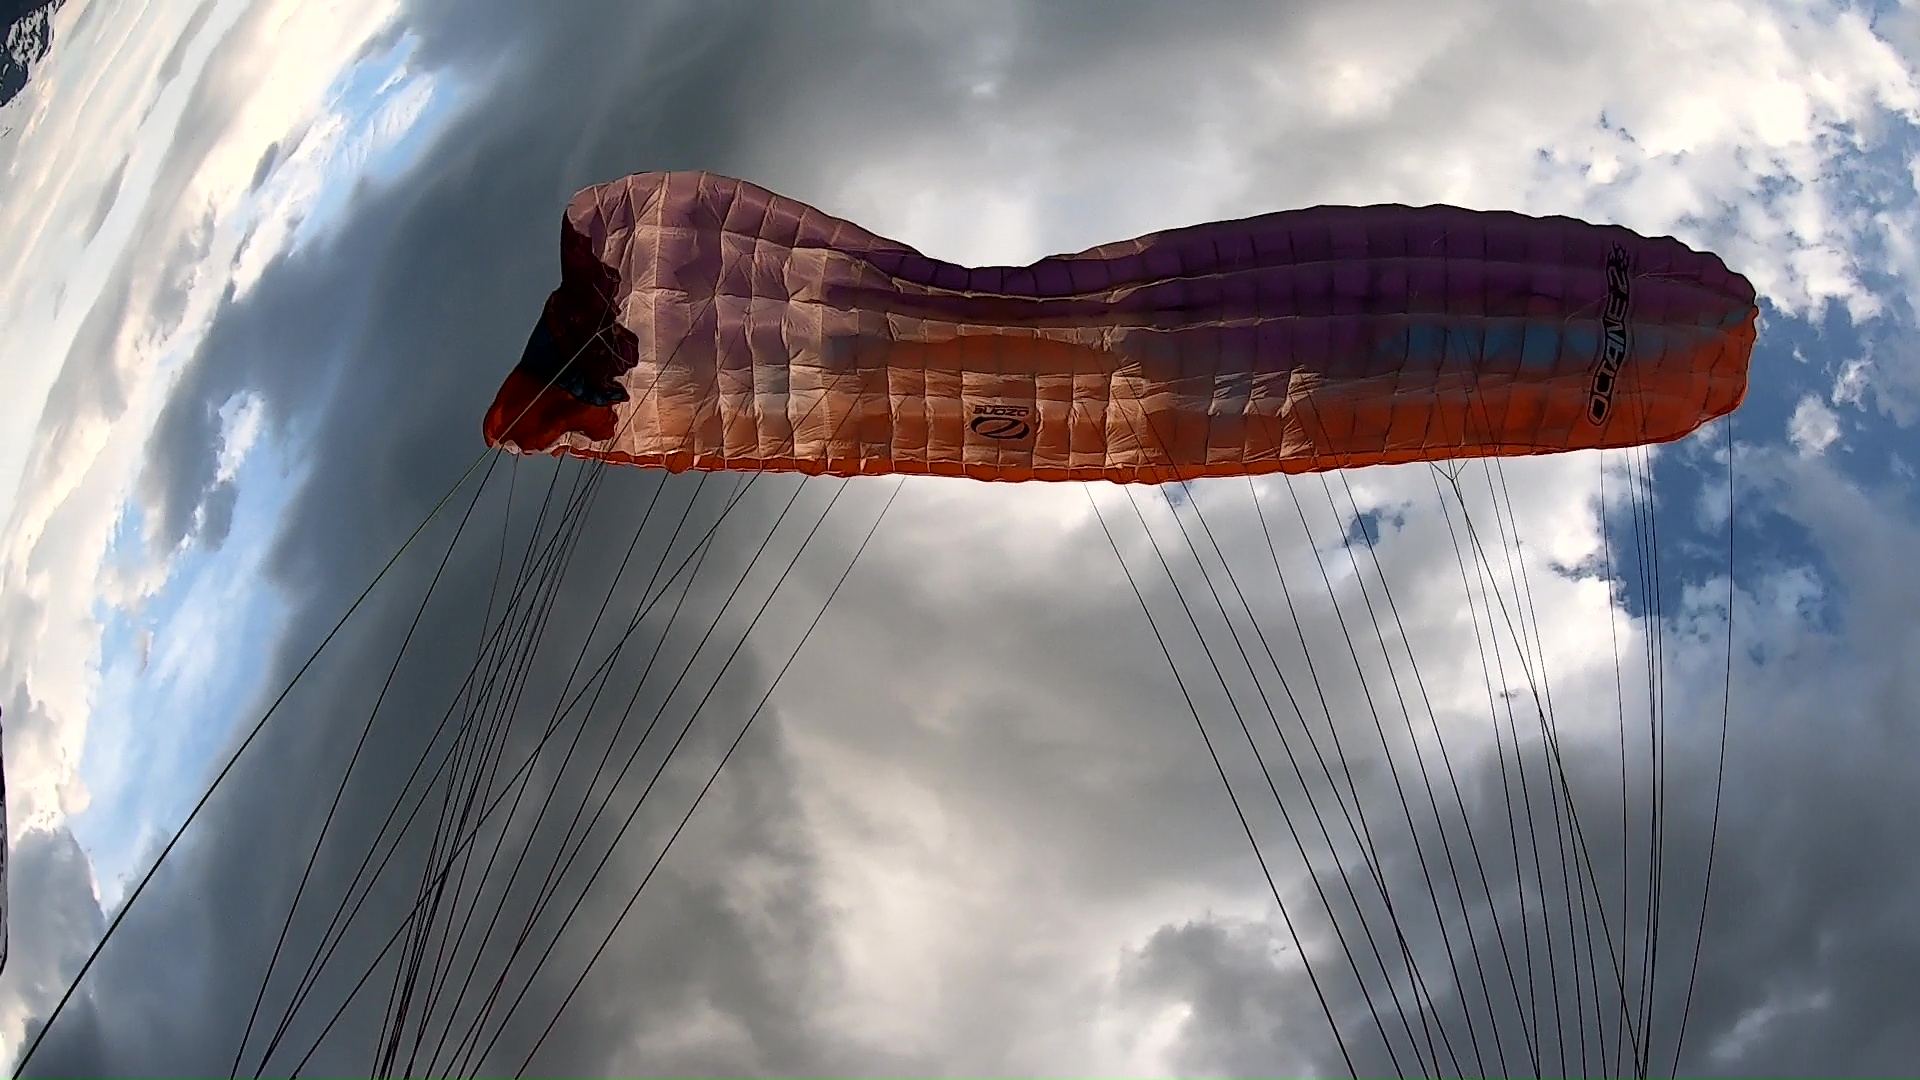 Håndterer du innklapp på den speed- eller paraglideren du flyr?